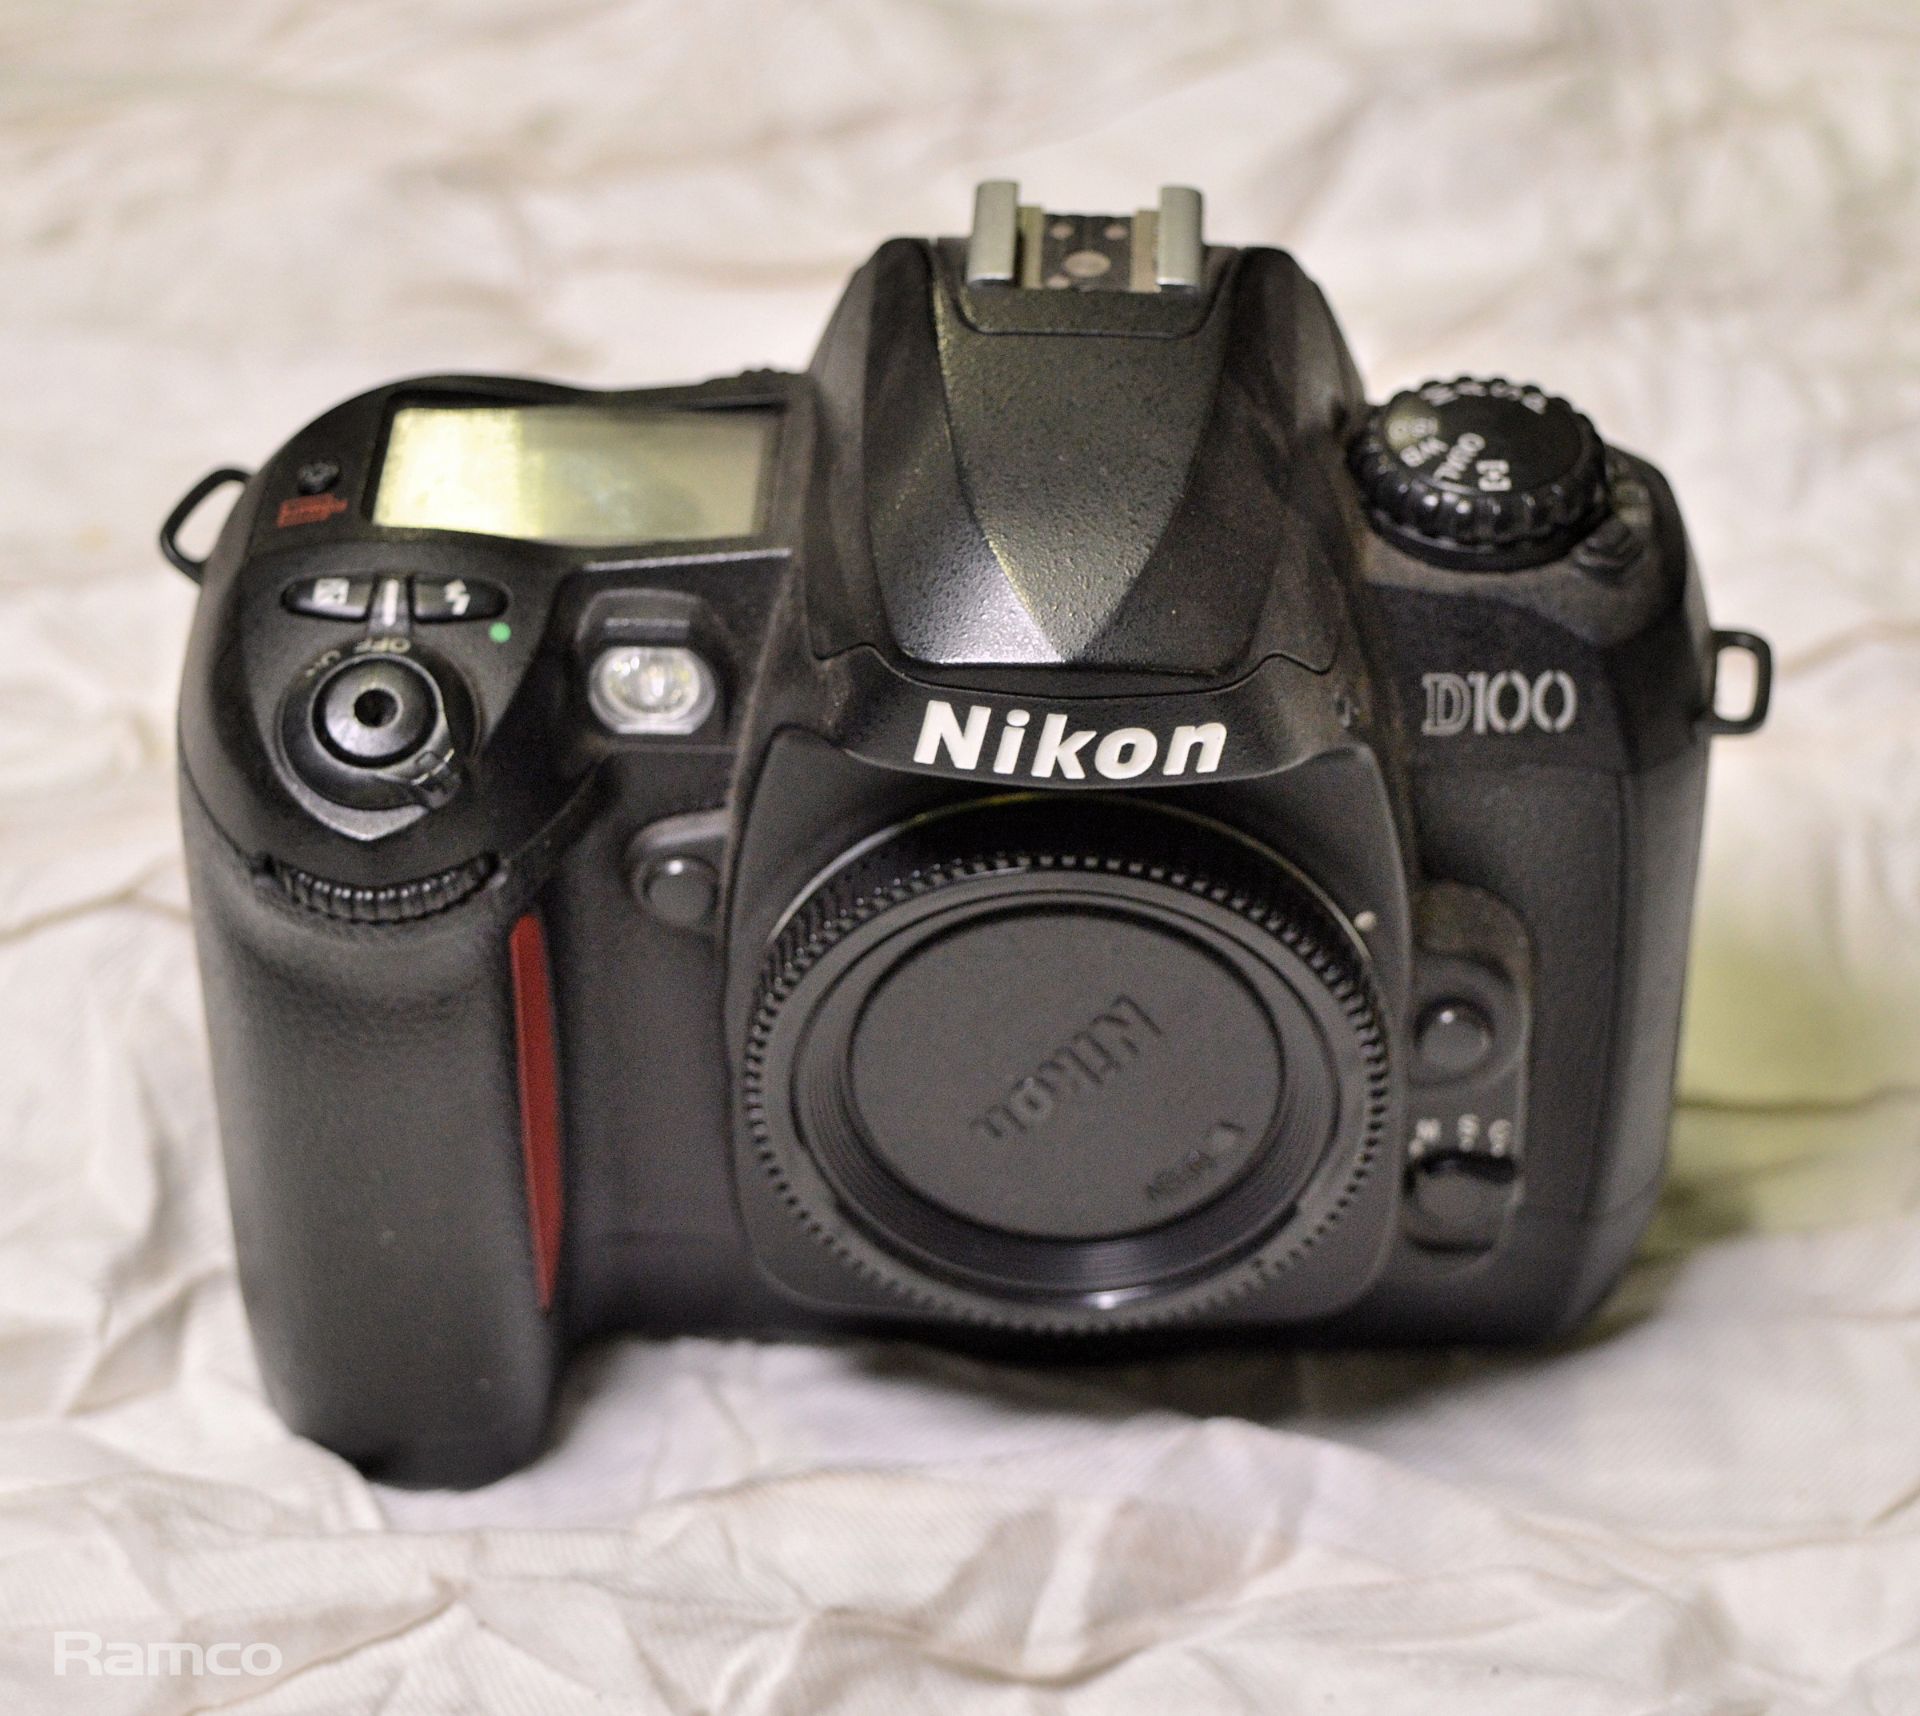 Nikon D100 SLR Digital Camera Body - Image 2 of 7